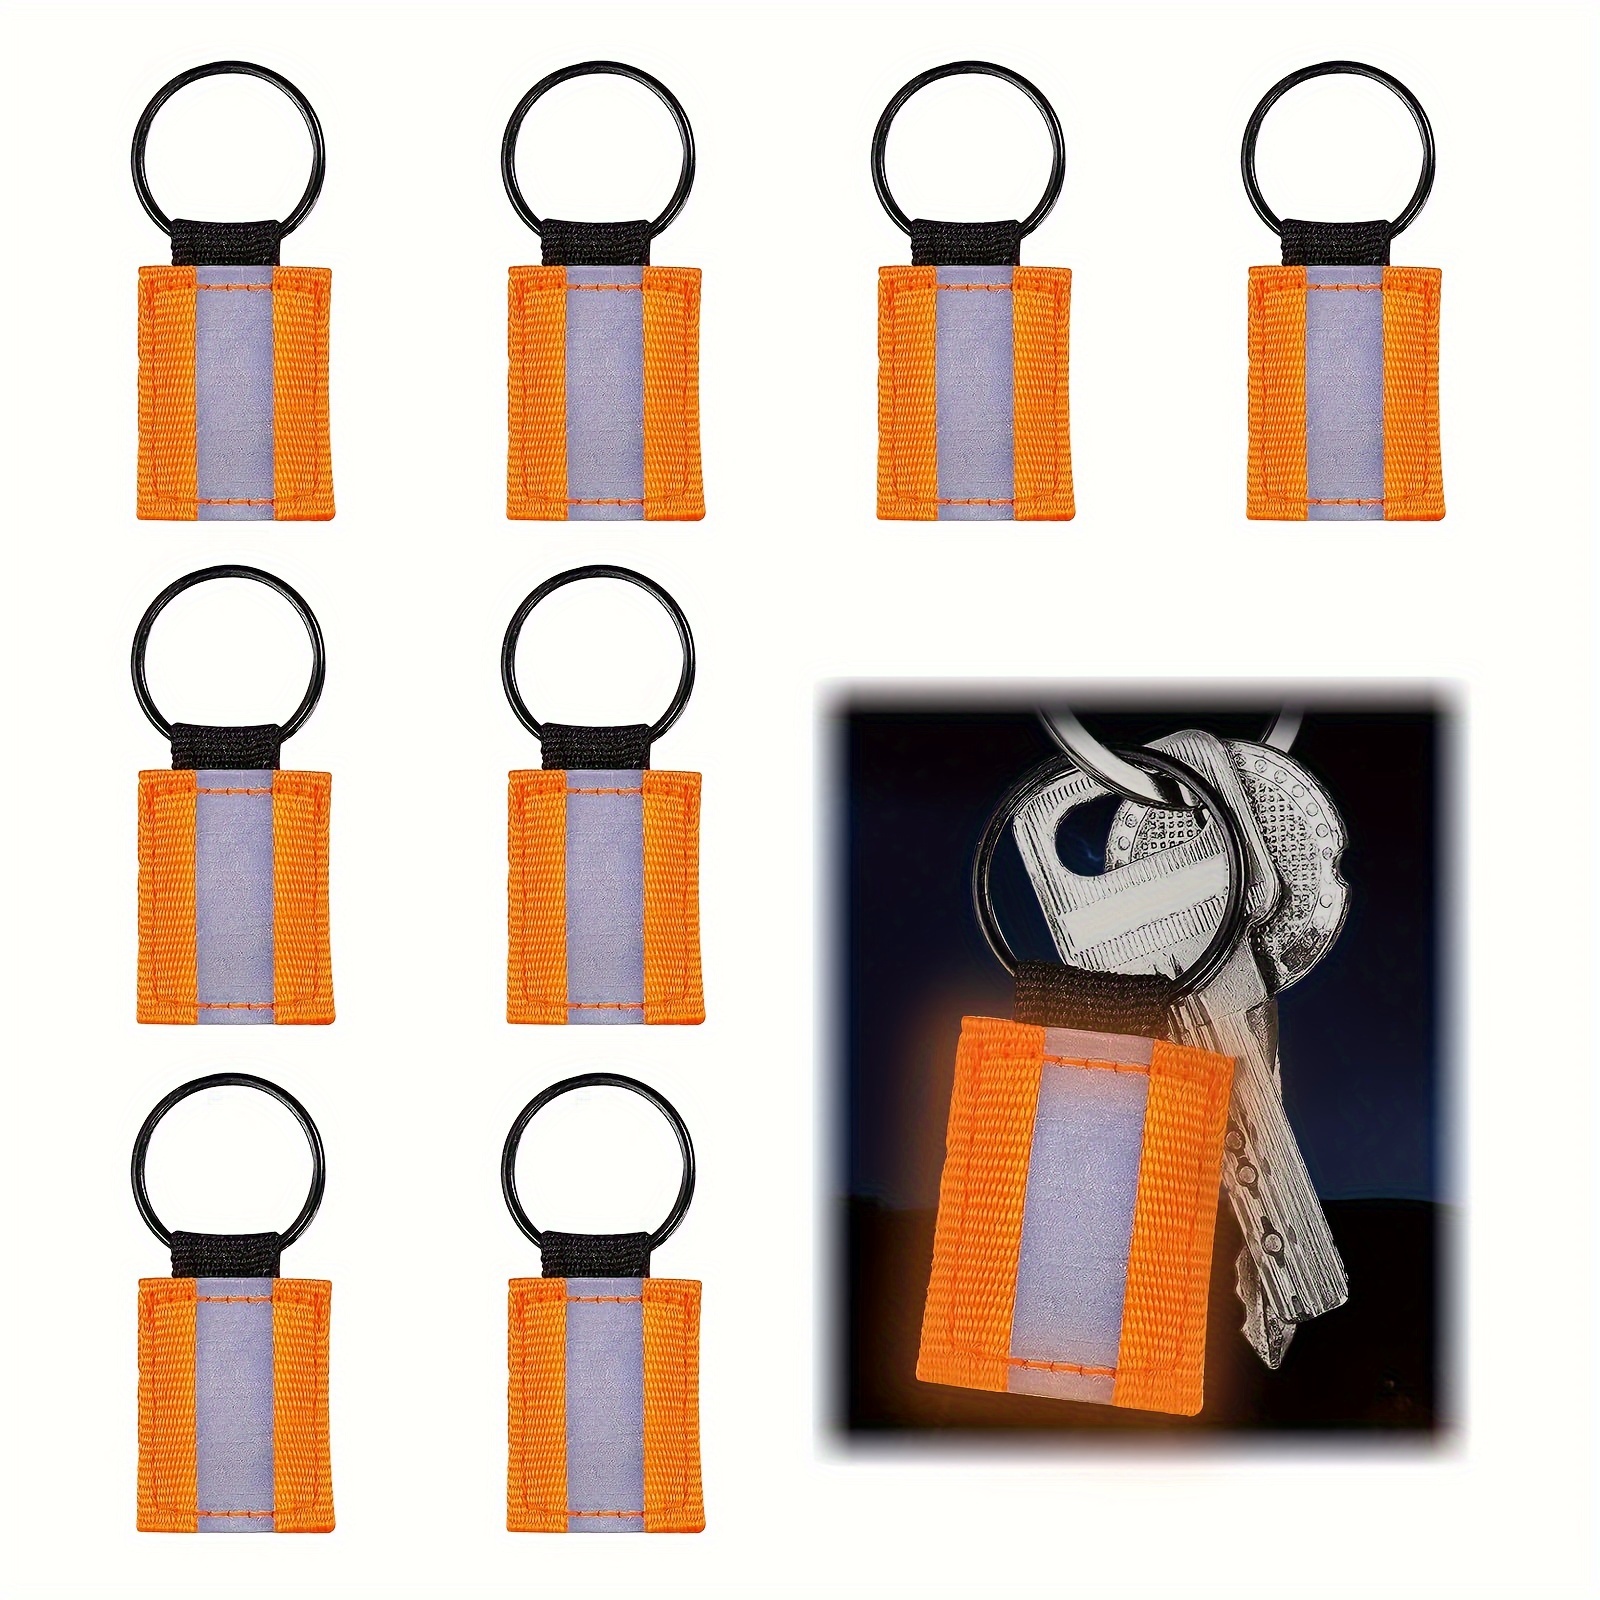 9 Stück/Packung Reflektor-Anhänger, Fußball-Schlüsselanhänger,  Sicherheits-Reflektor-Anhänger, Reflektor-Anhänger Für Schultasche,  Rucksack